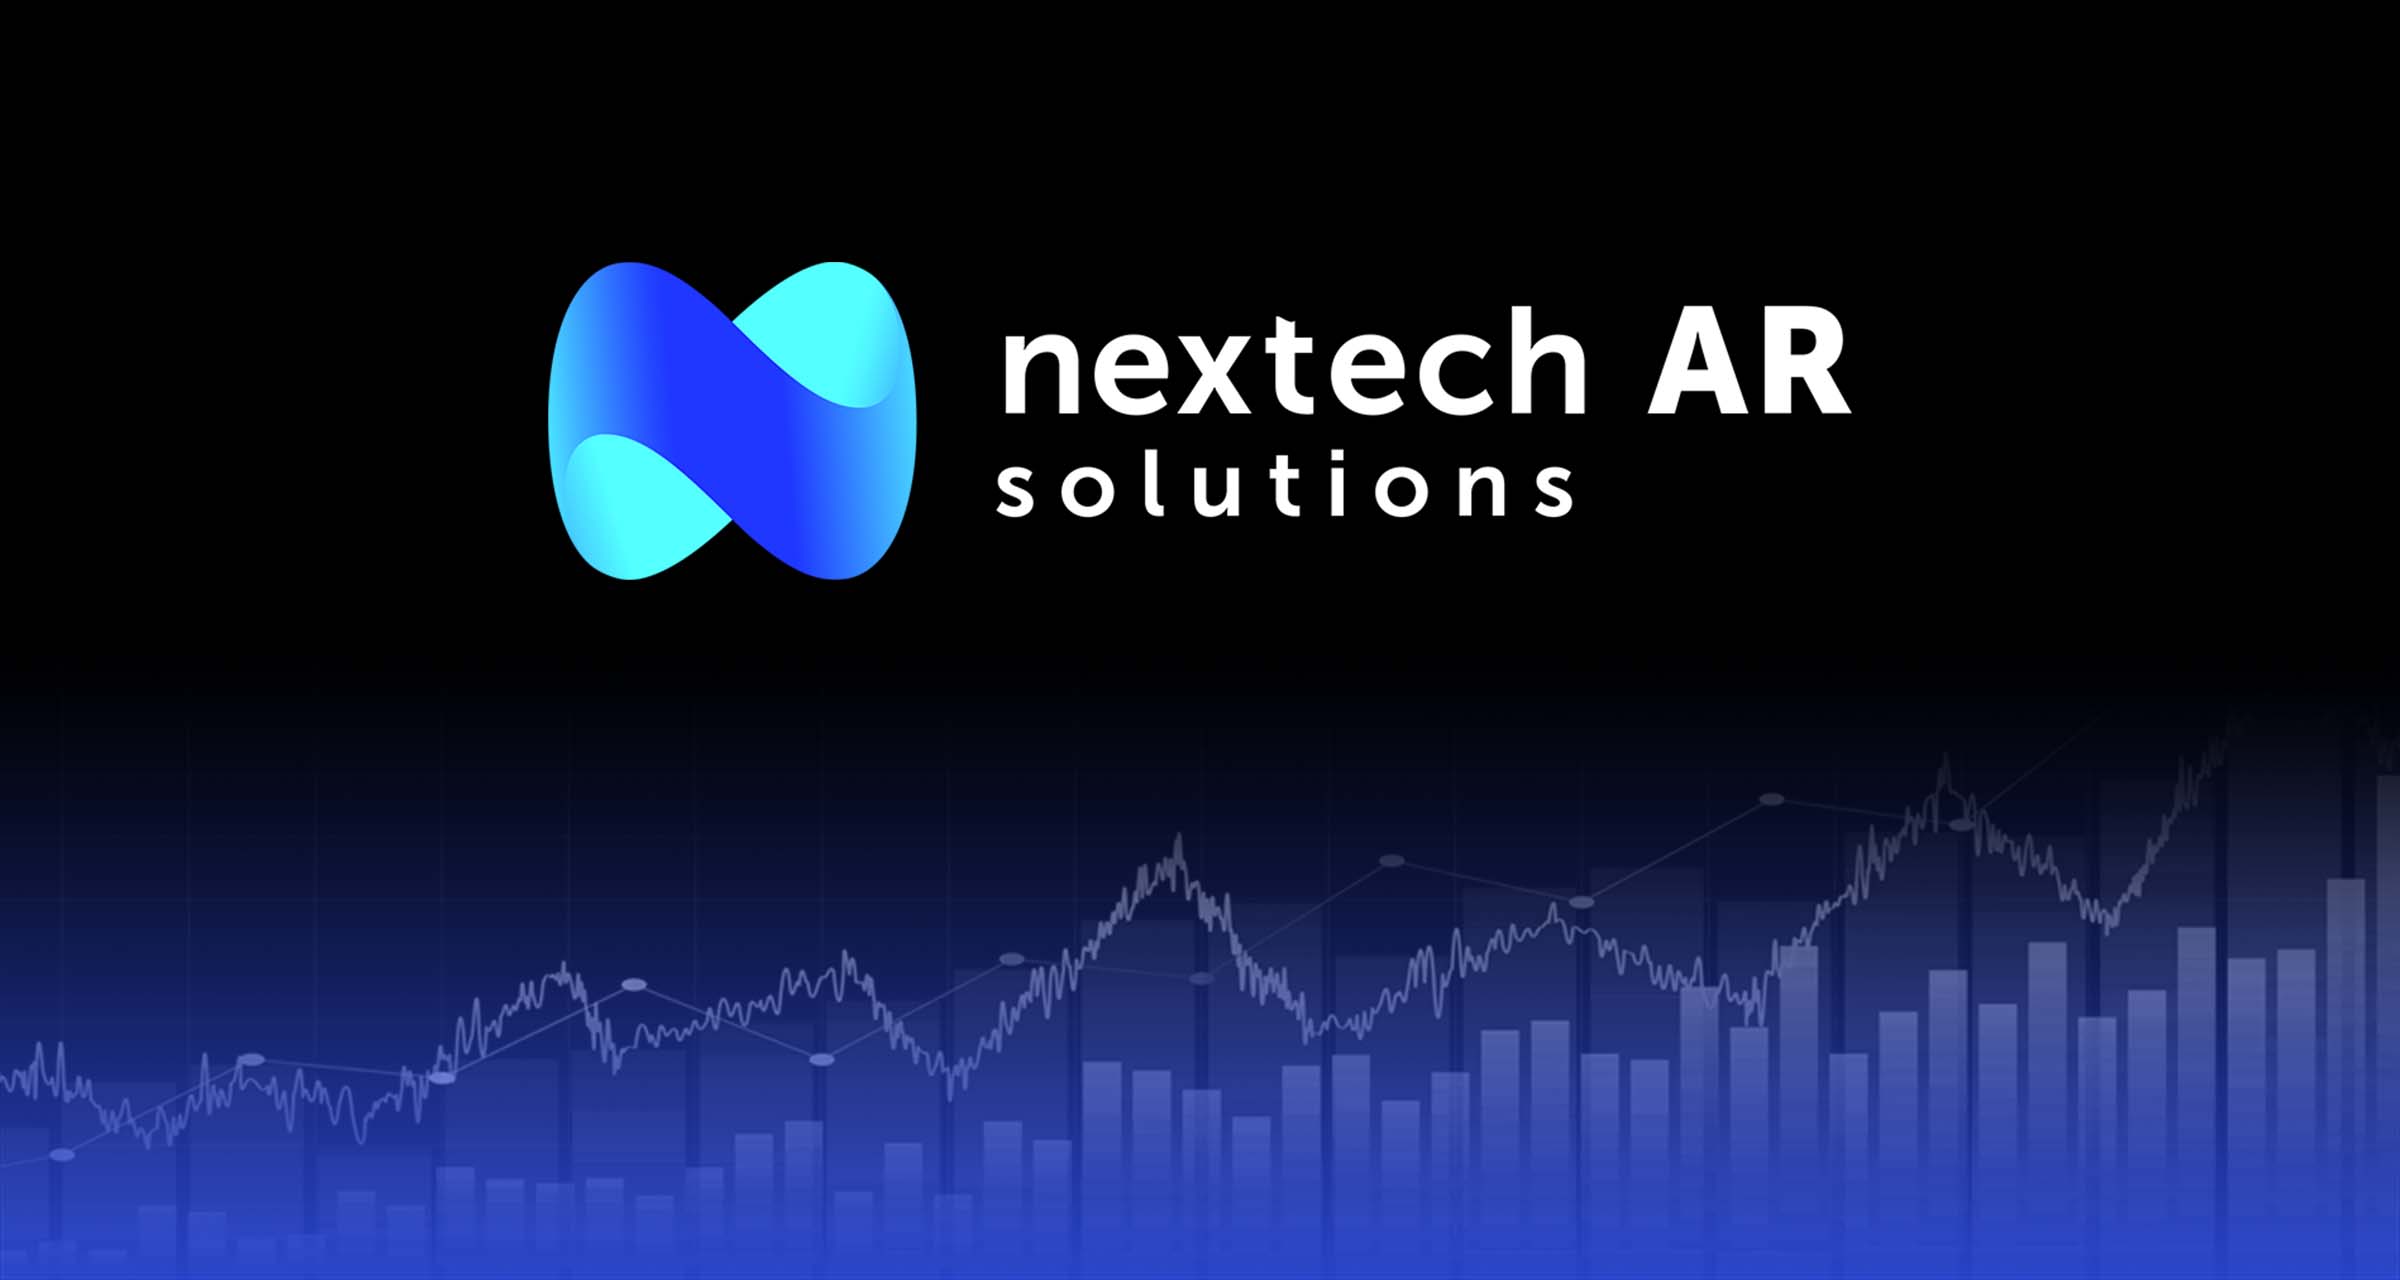 Nextech AR